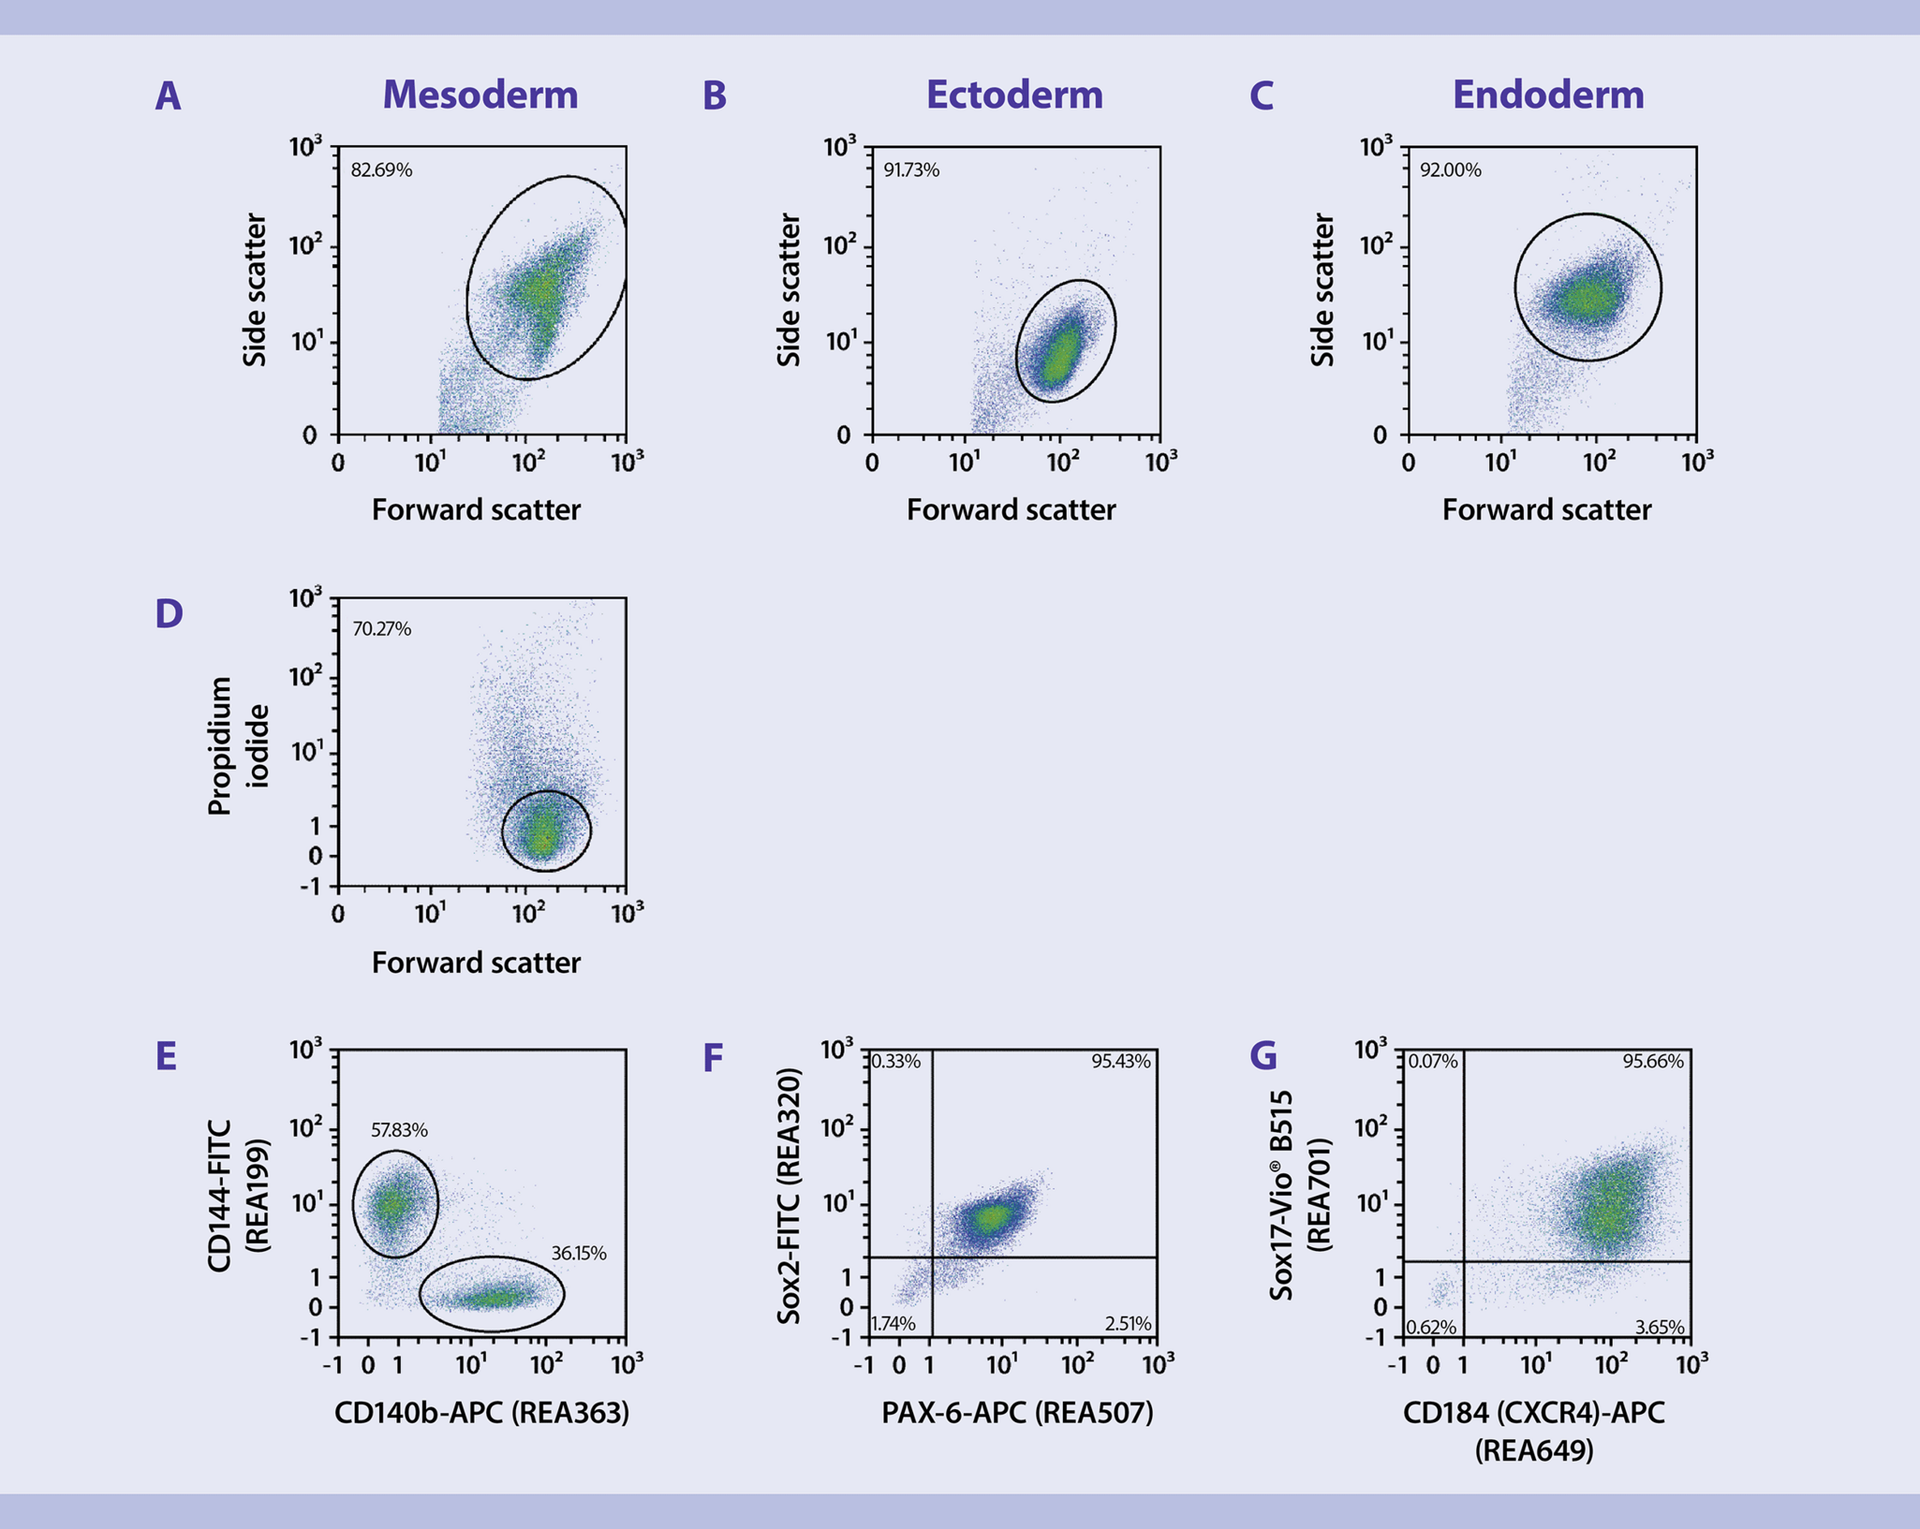 Exosome isolation and analysis, Miltenyi Biotec